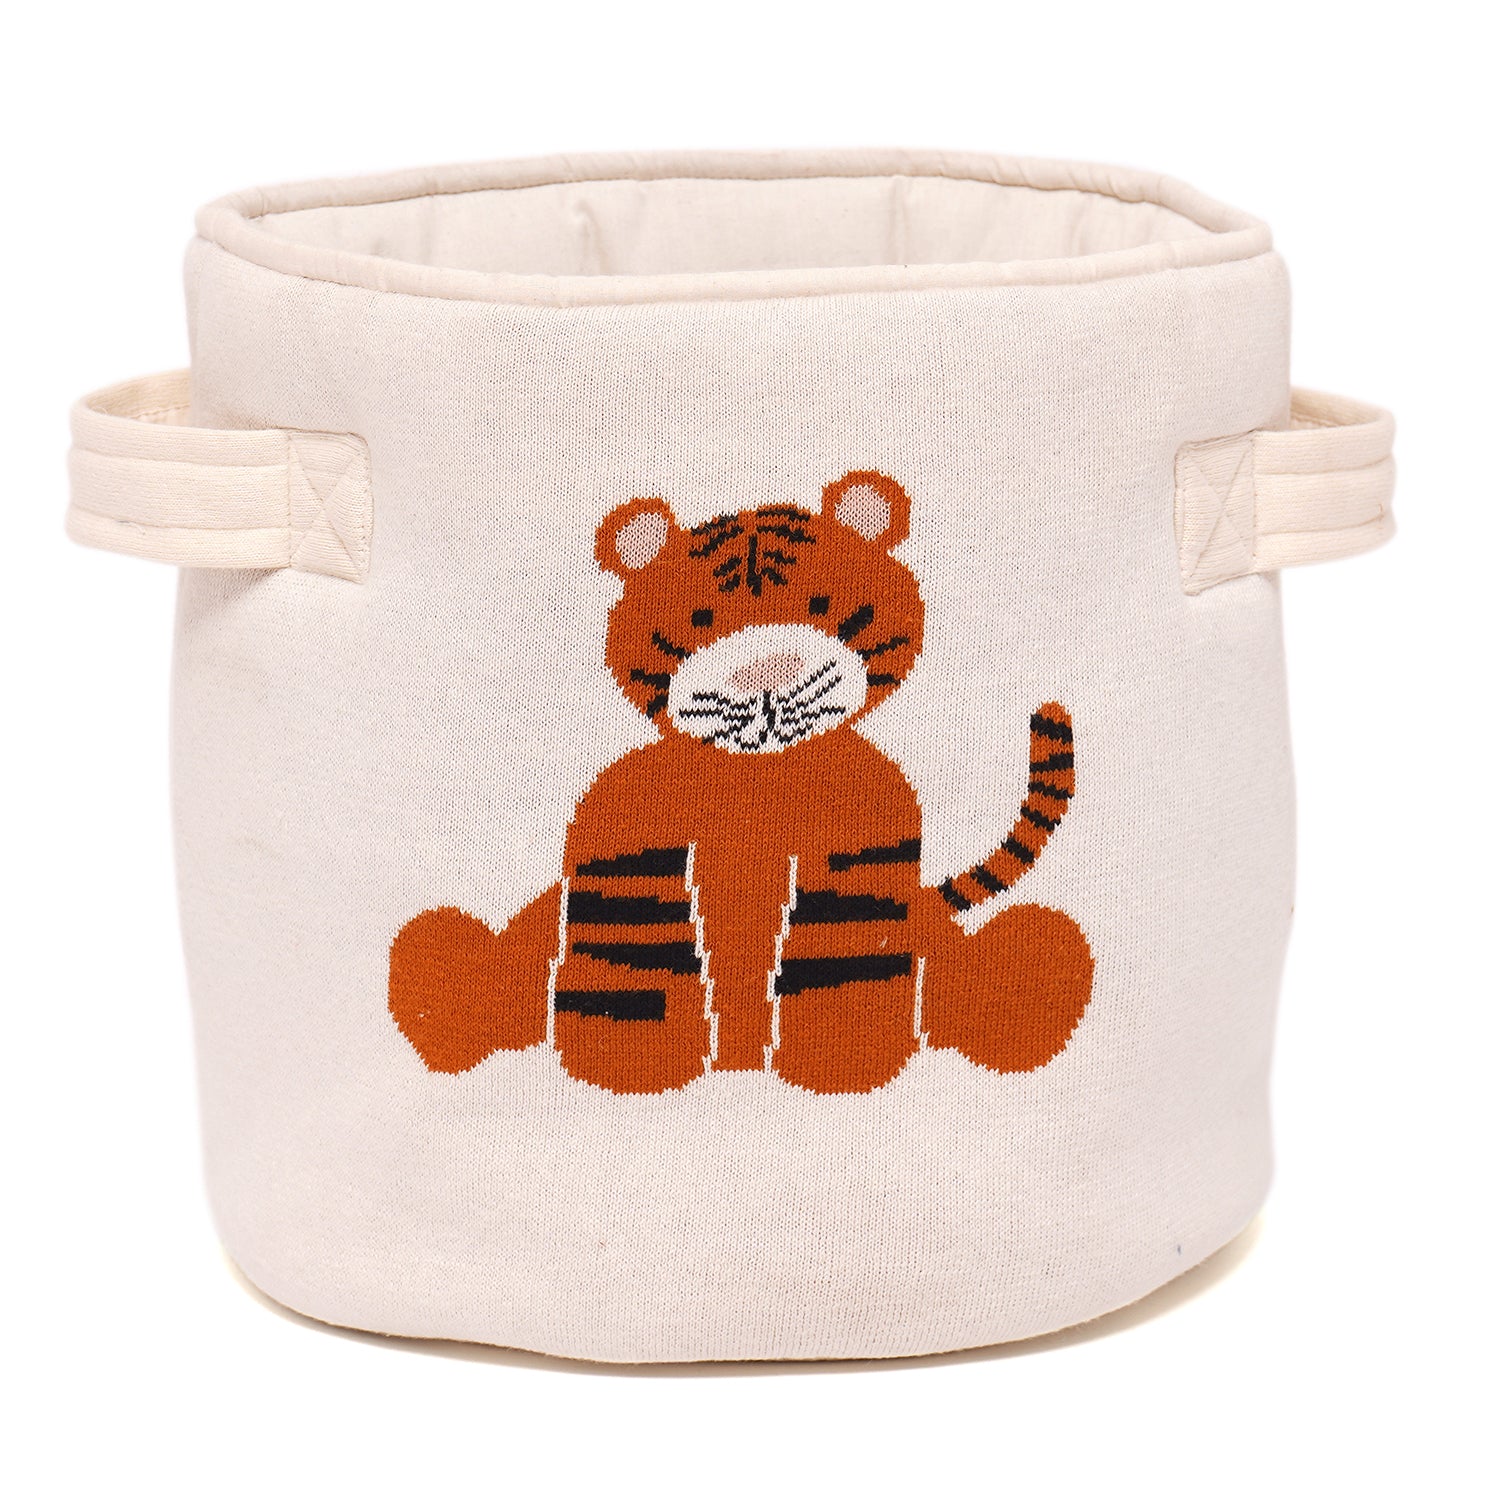 Tidy sleep 100% Cotton Knitted Tiger Print Multipurpose Storage Basket